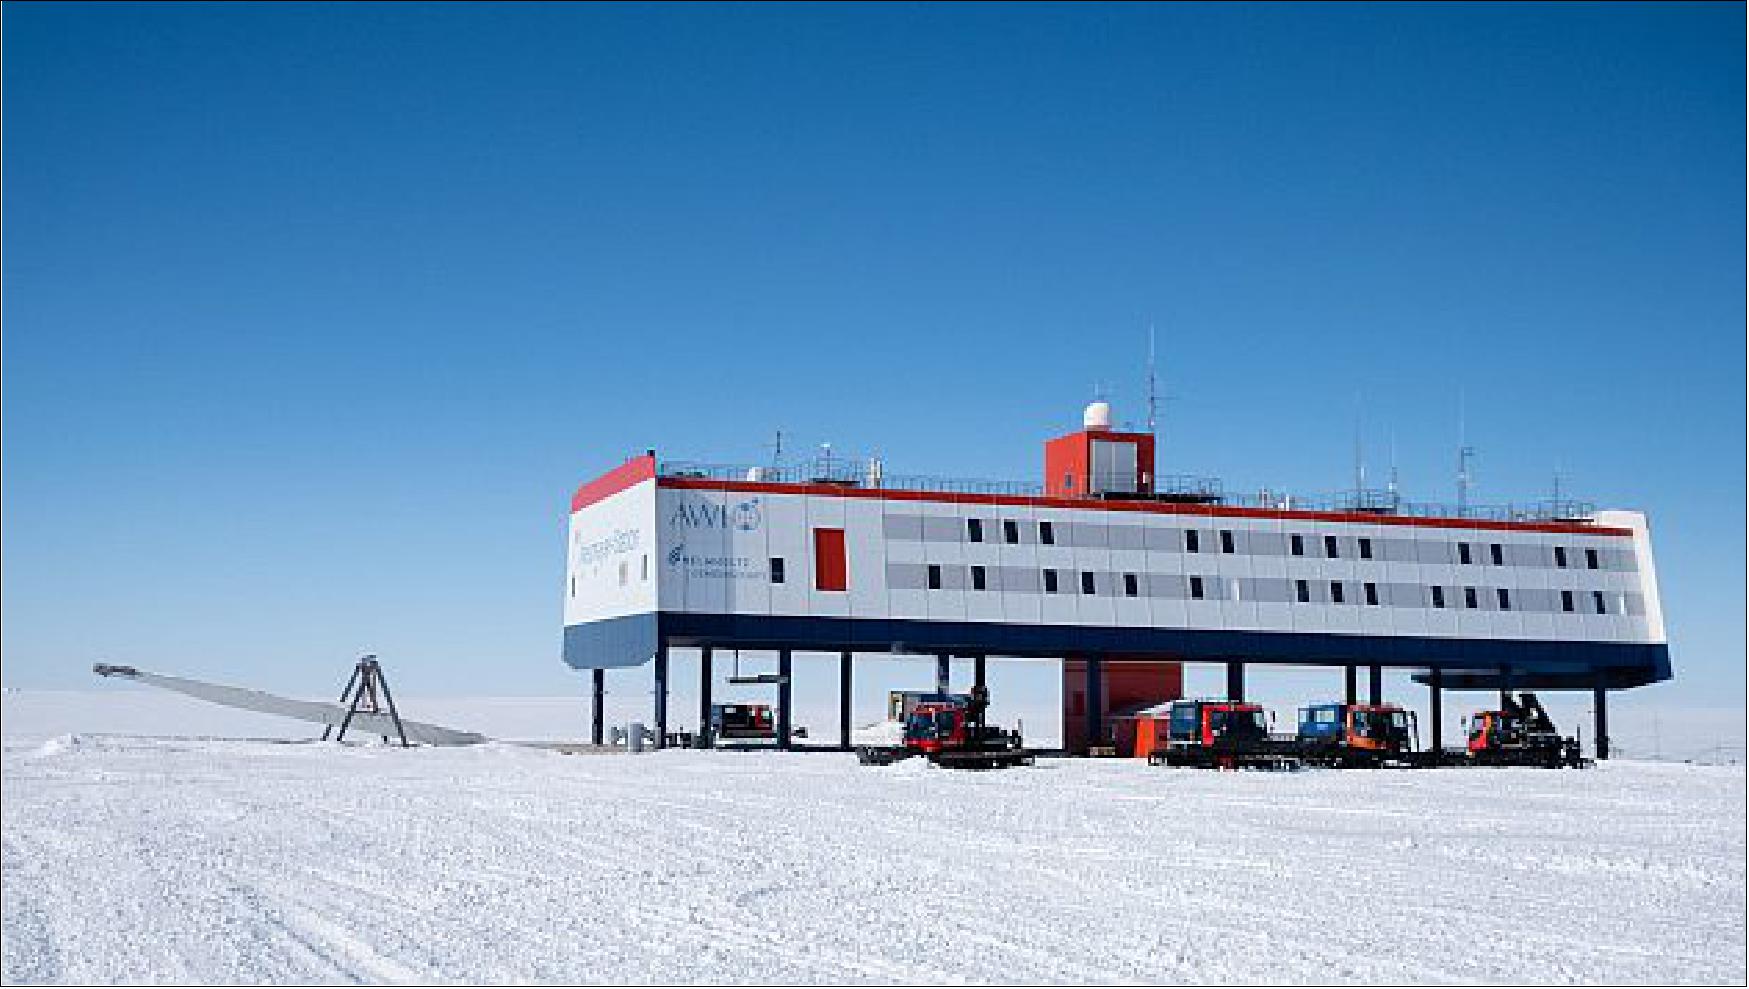 Figure 13: Neumayer III Station in Antarctica (image credit: DLR/NASA/Jess Bunchek)